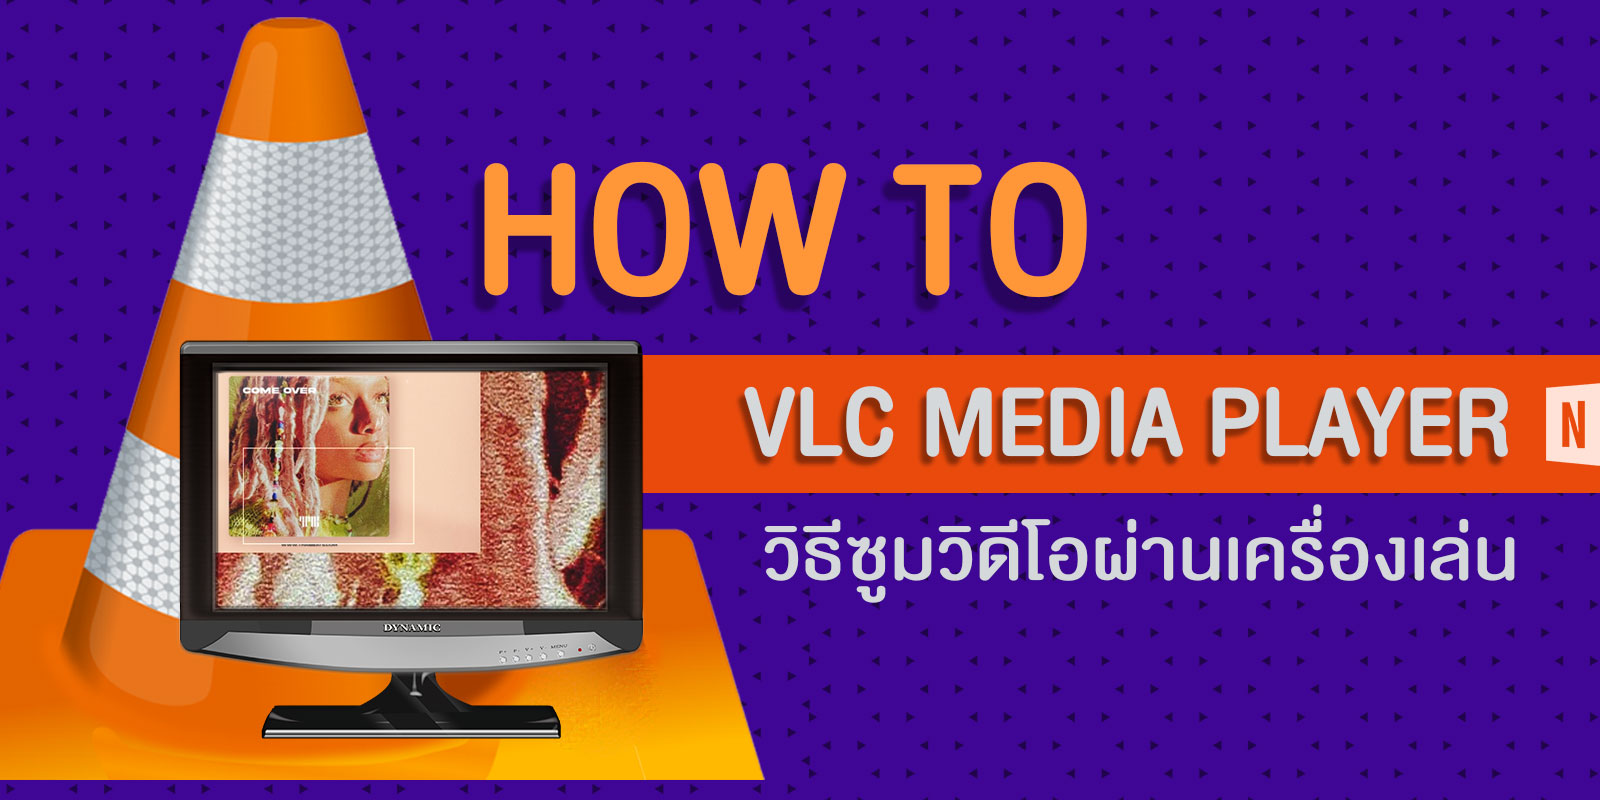 How To วิธีซูมวิดีโอผ่านเครื่องเล่น Vlc Media Player | Trueid Creator